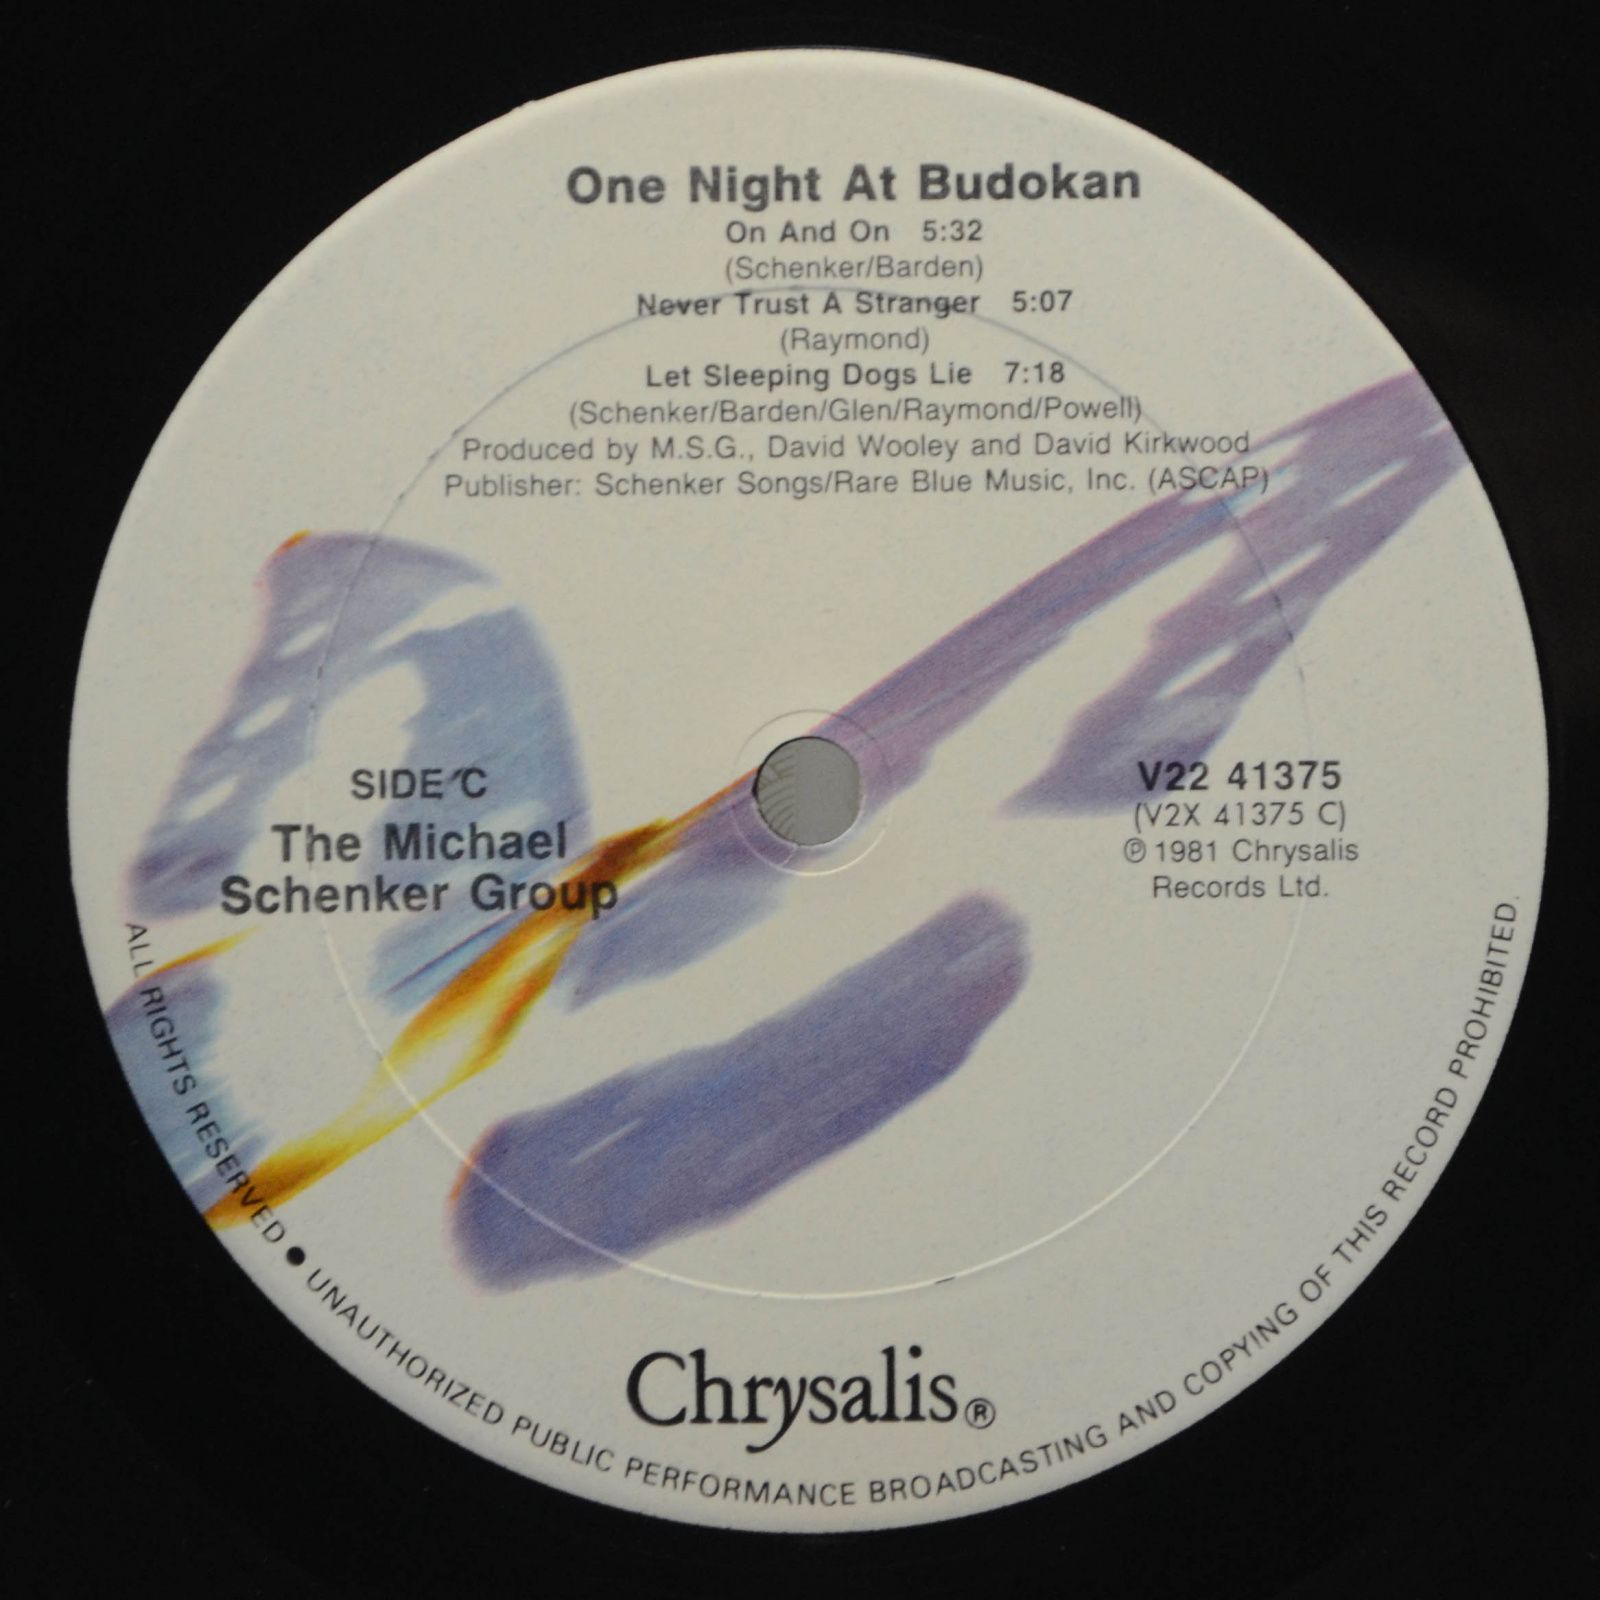 Michael Schenker Group — One Night At Budokan (2LP), 1981